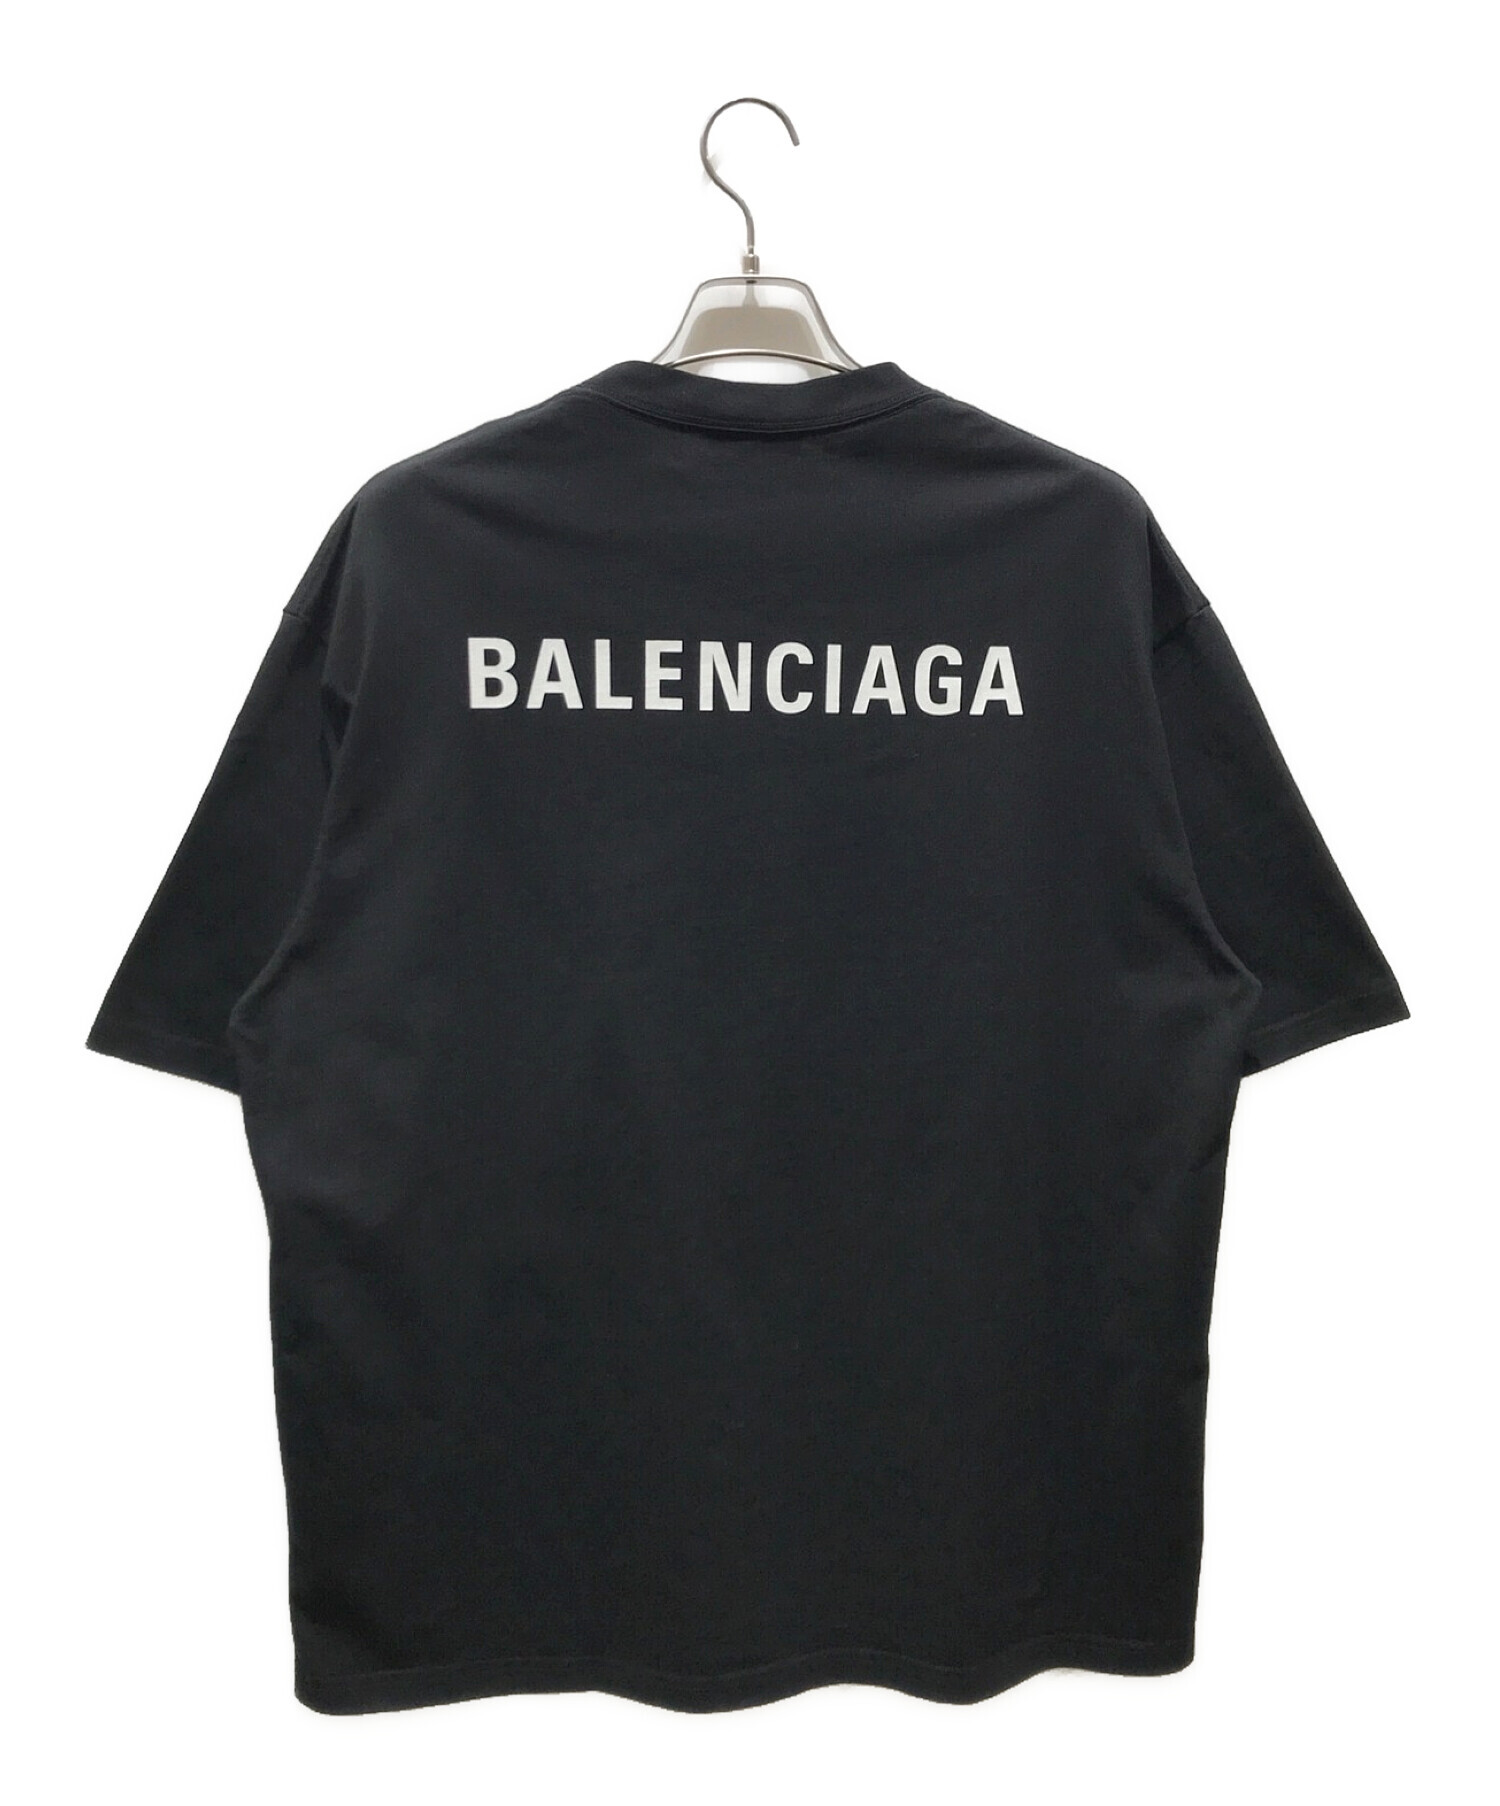 BALENCIAGA (バレンシアガ) ロゴプリントオーバーサイズTシャツ　HT83 612966 TIVG5 1070　 MT ブラック サイズ:M